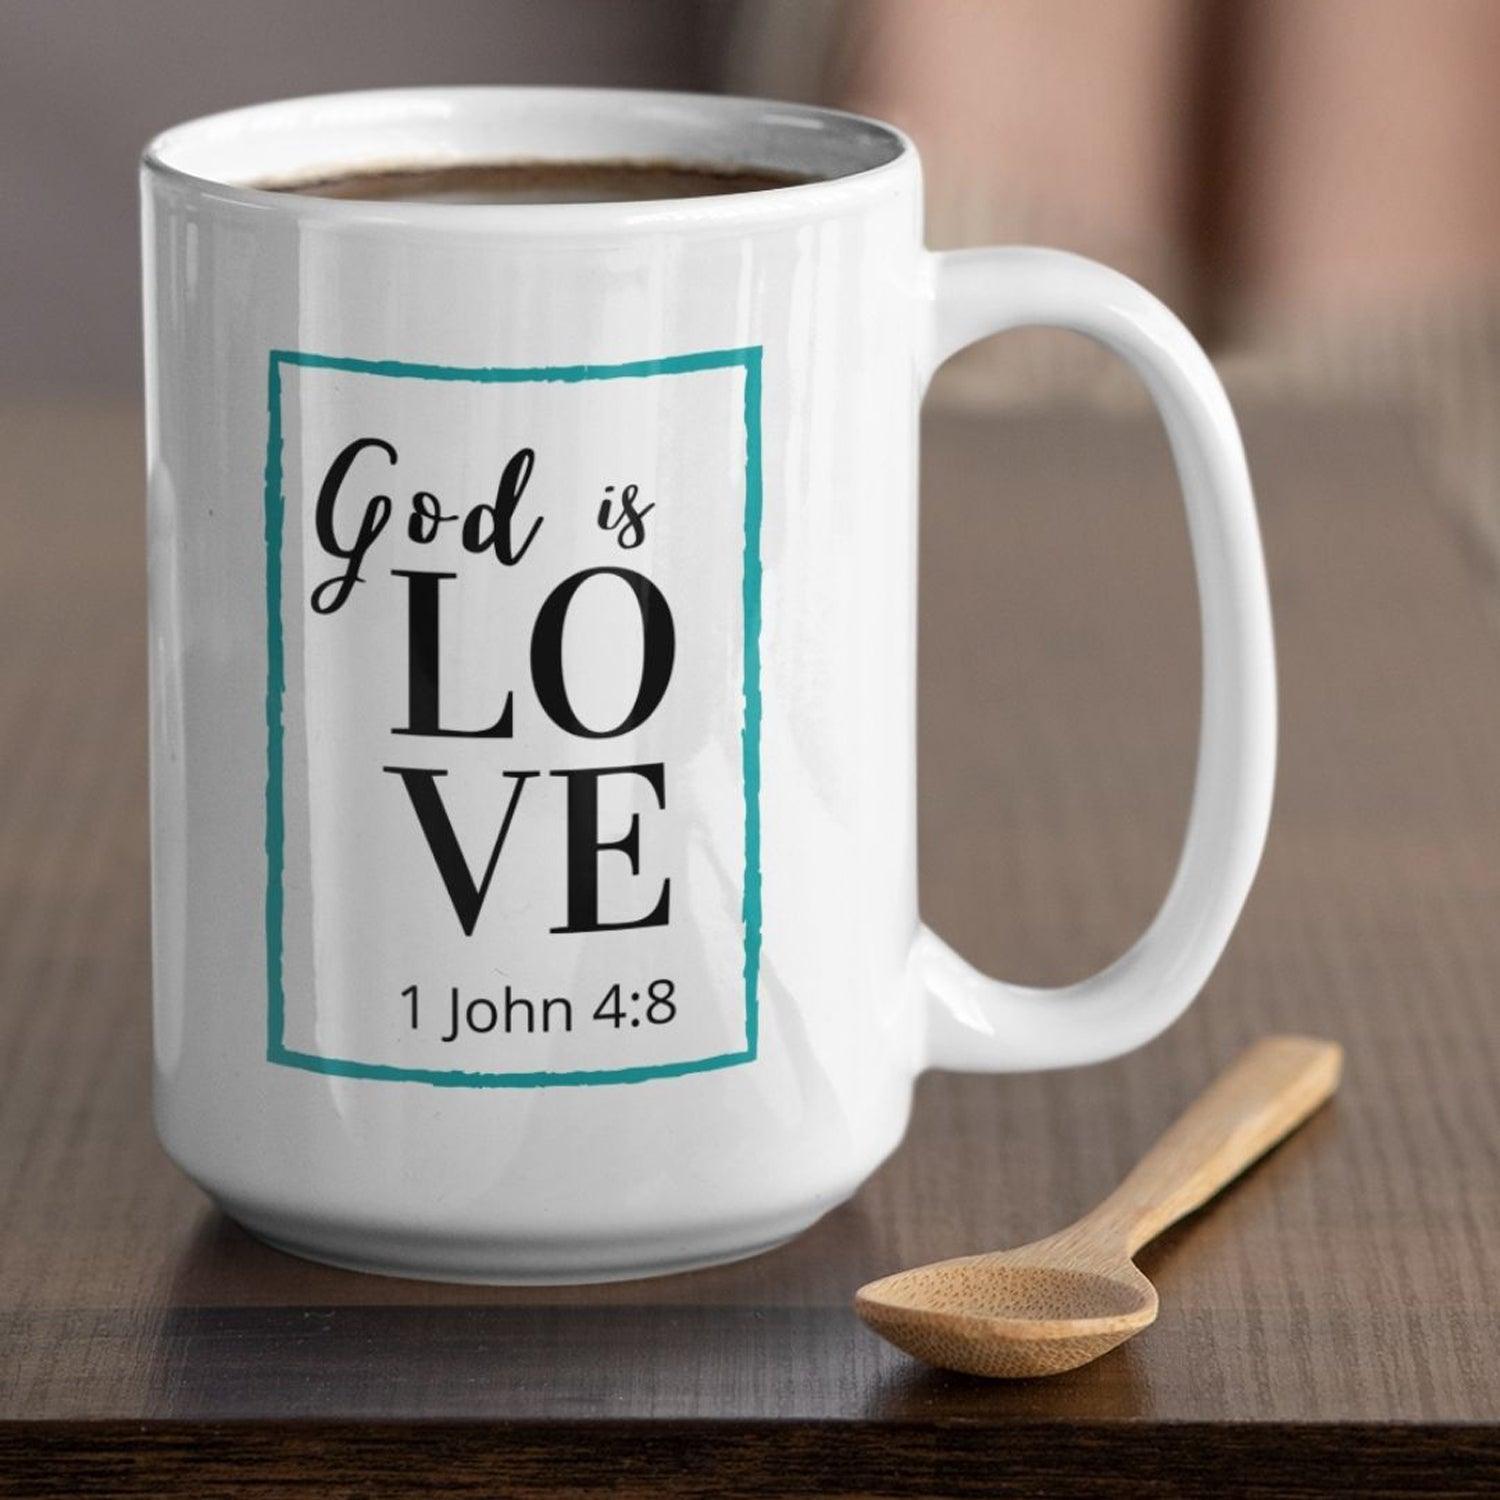 God is Love 1 John 4:8 White Mug - TheGivenGet